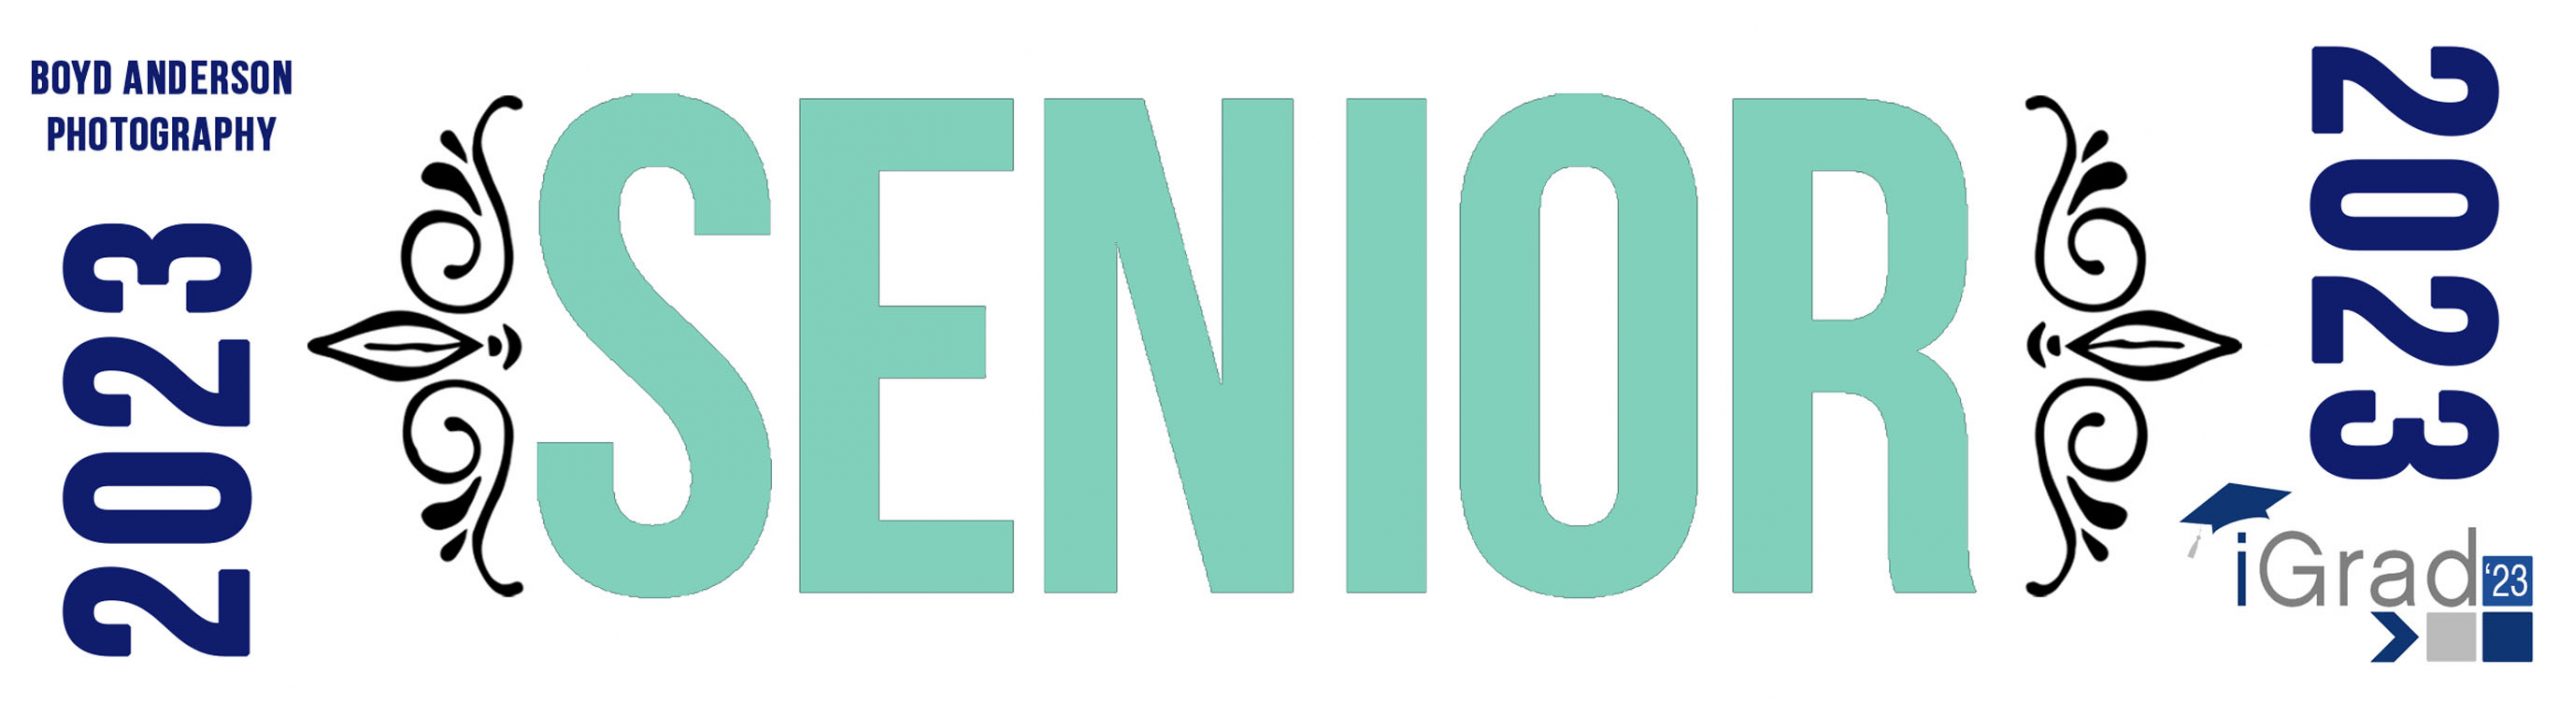 2023 senior logo